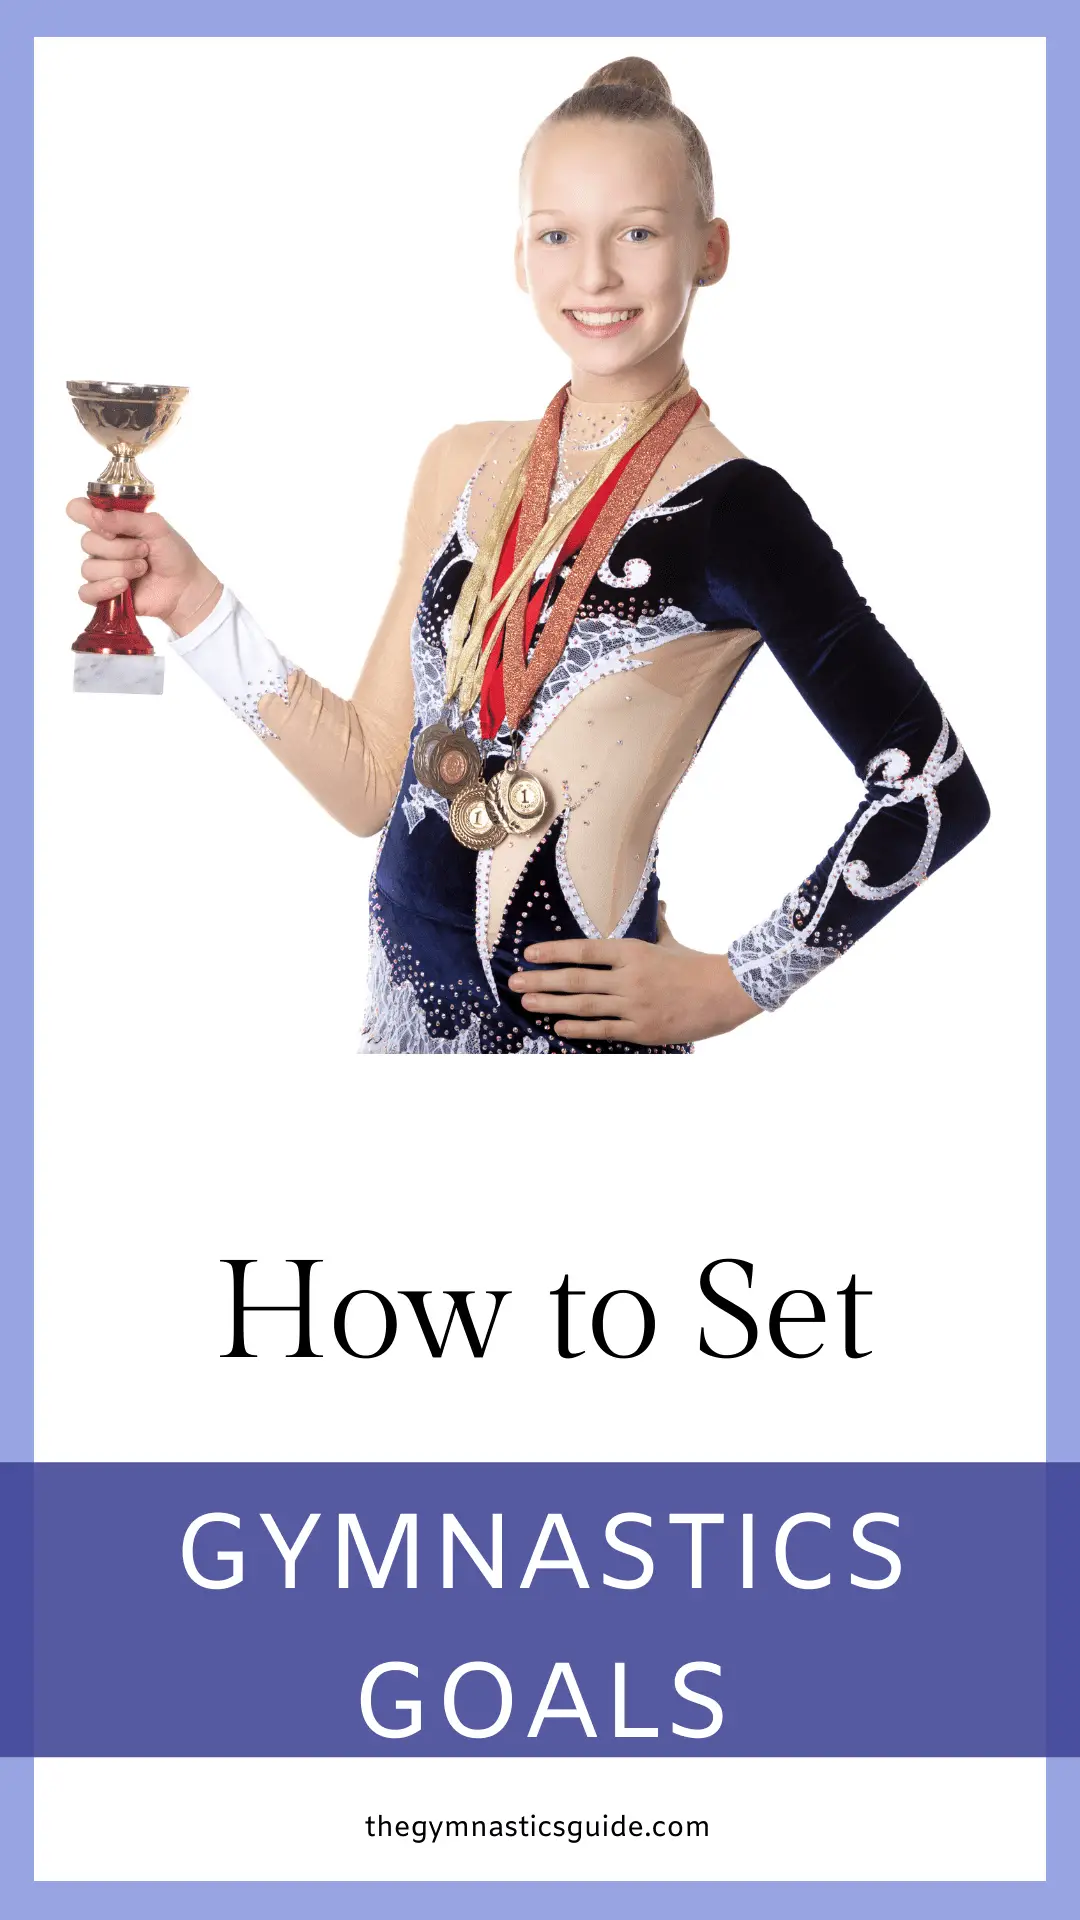 How to Set Gymnastics Goals